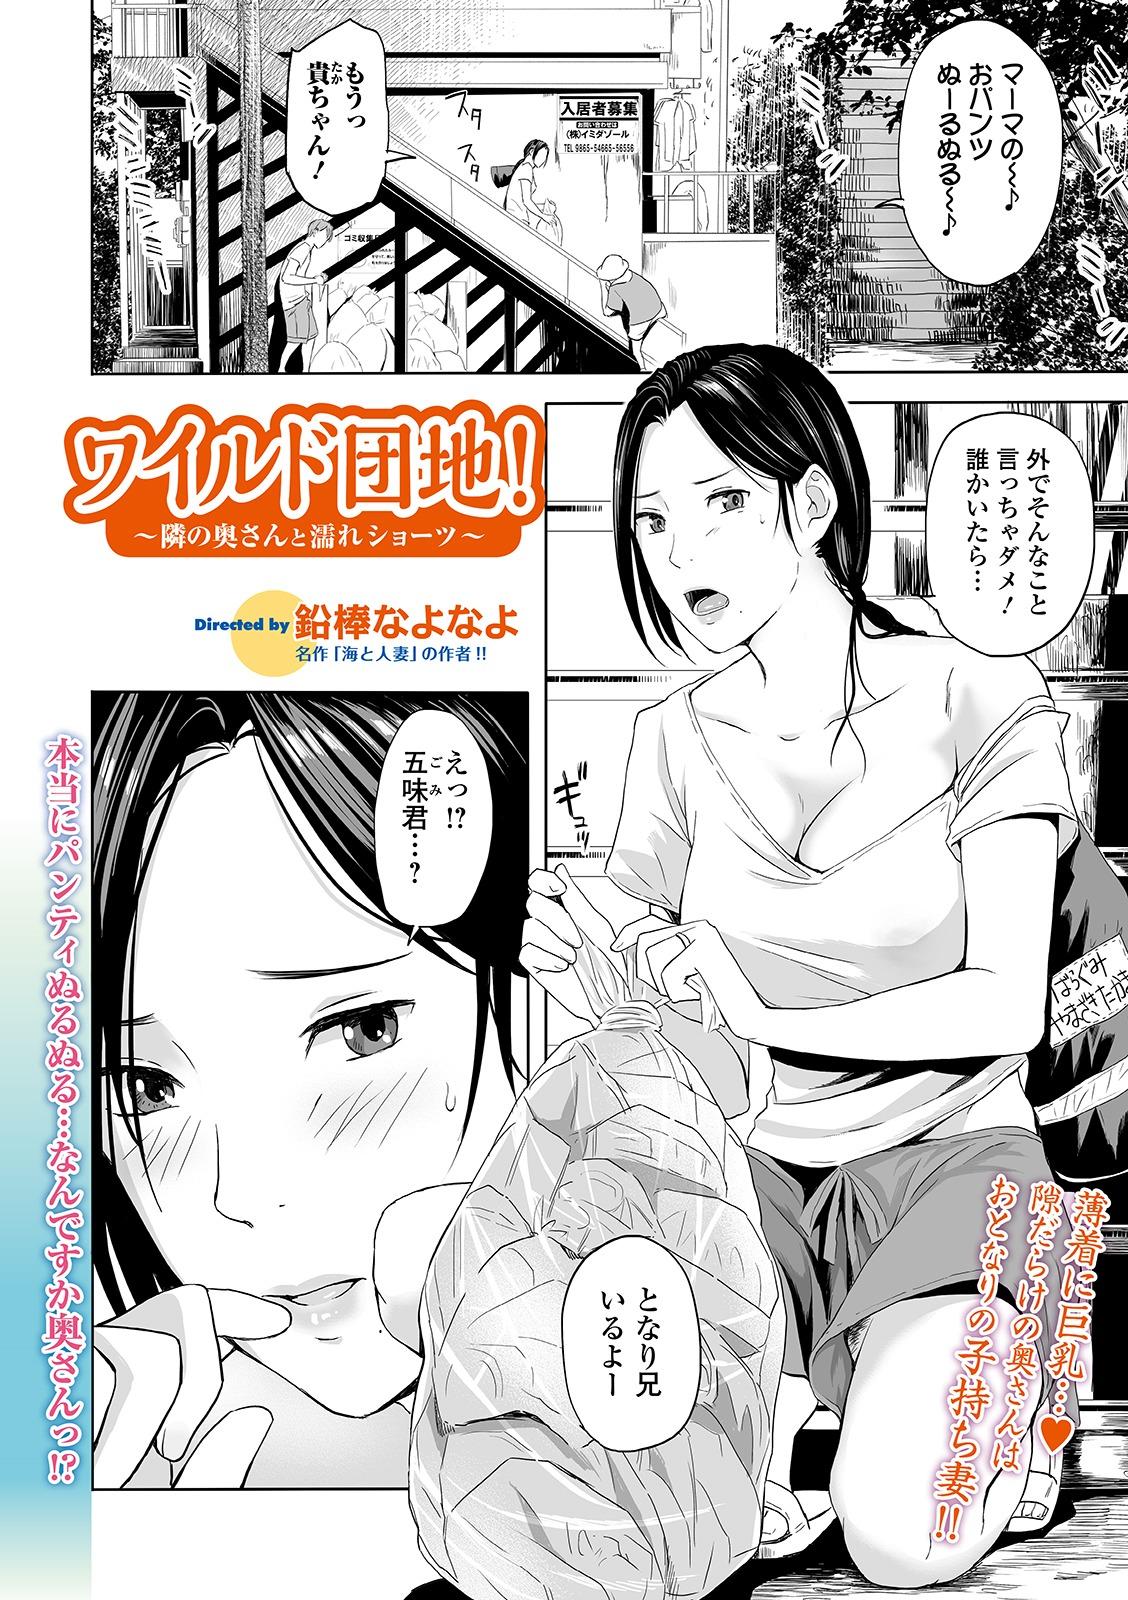 Caught Web Comic Toutetsu Vol. 44 Chibola - Page 4